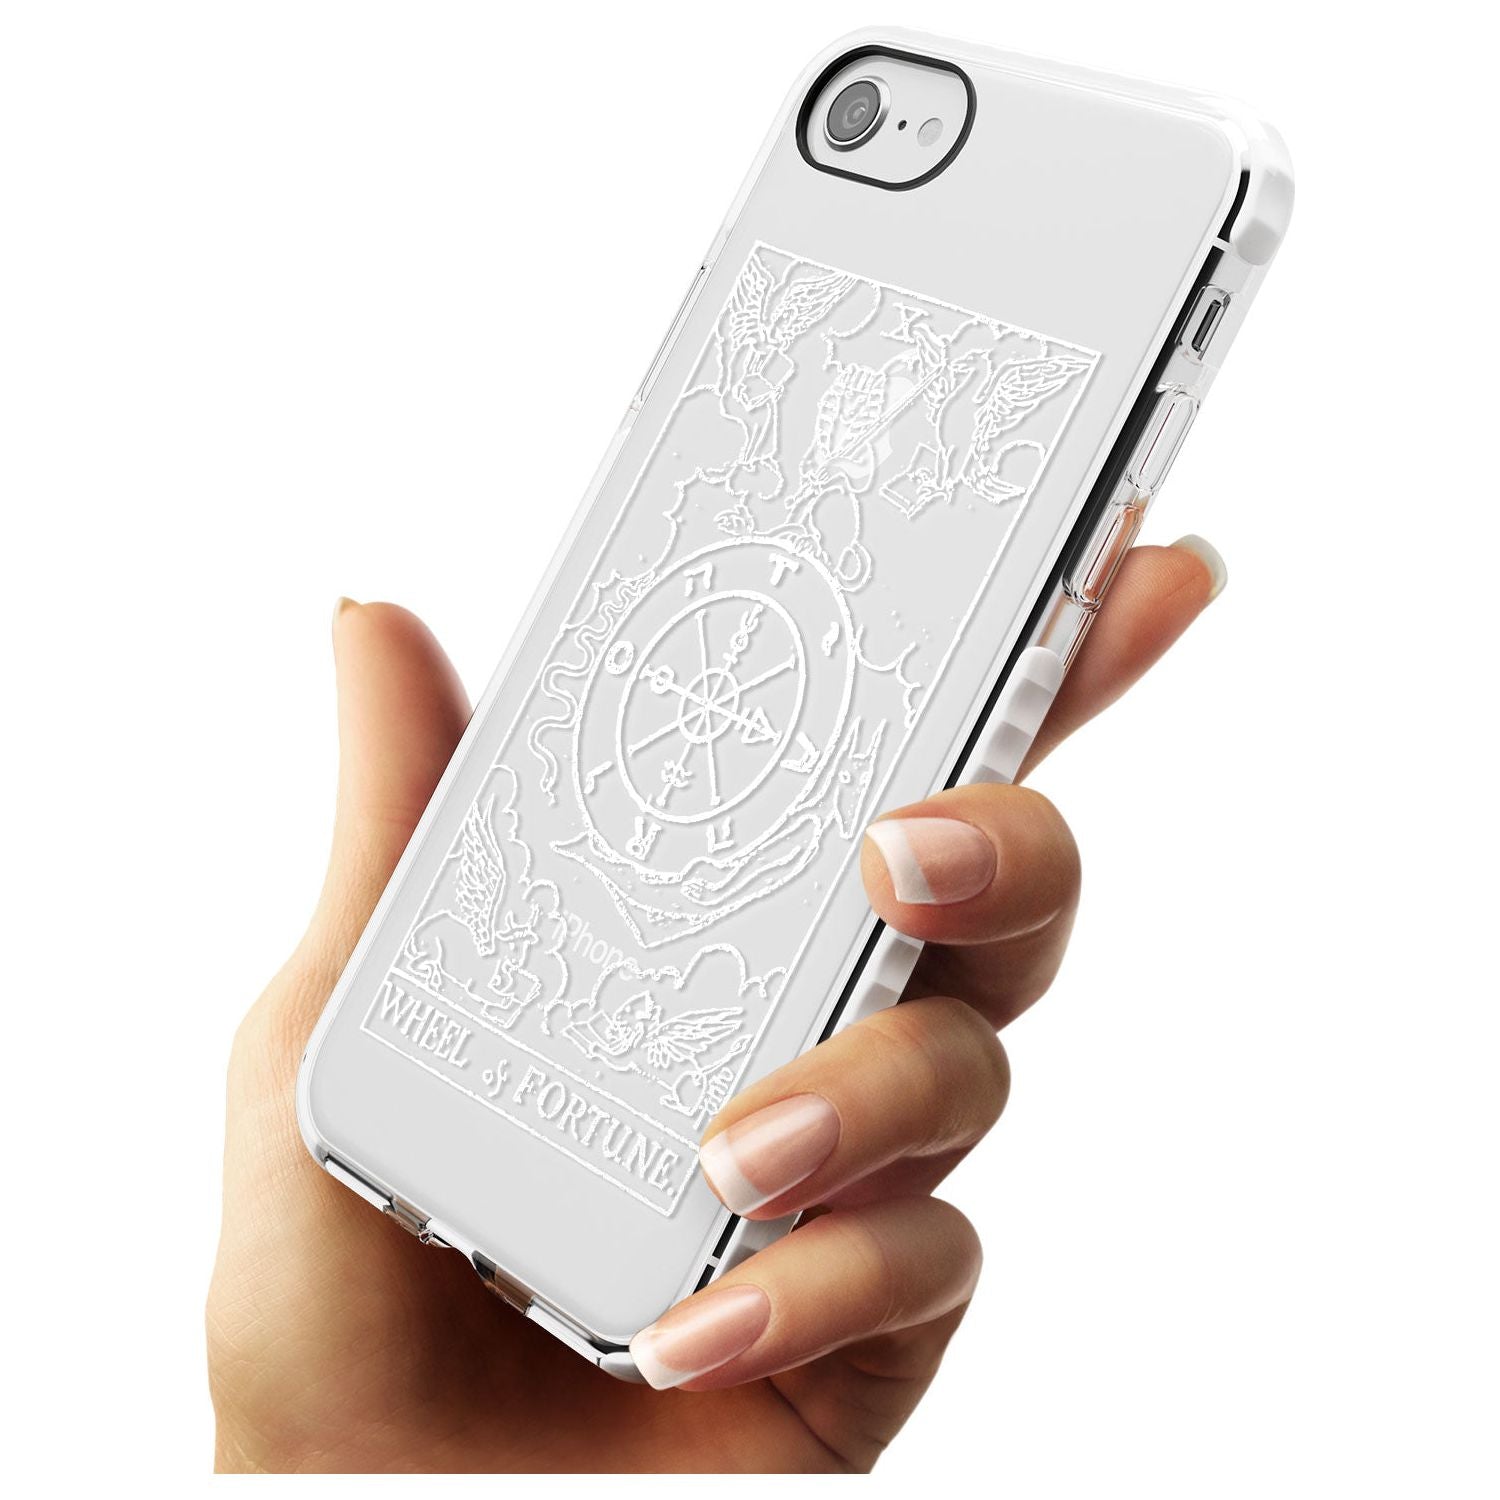 Wheel of Fortune Tarot Card - White Transparent Slim TPU Phone Case for iPhone SE 8 7 Plus